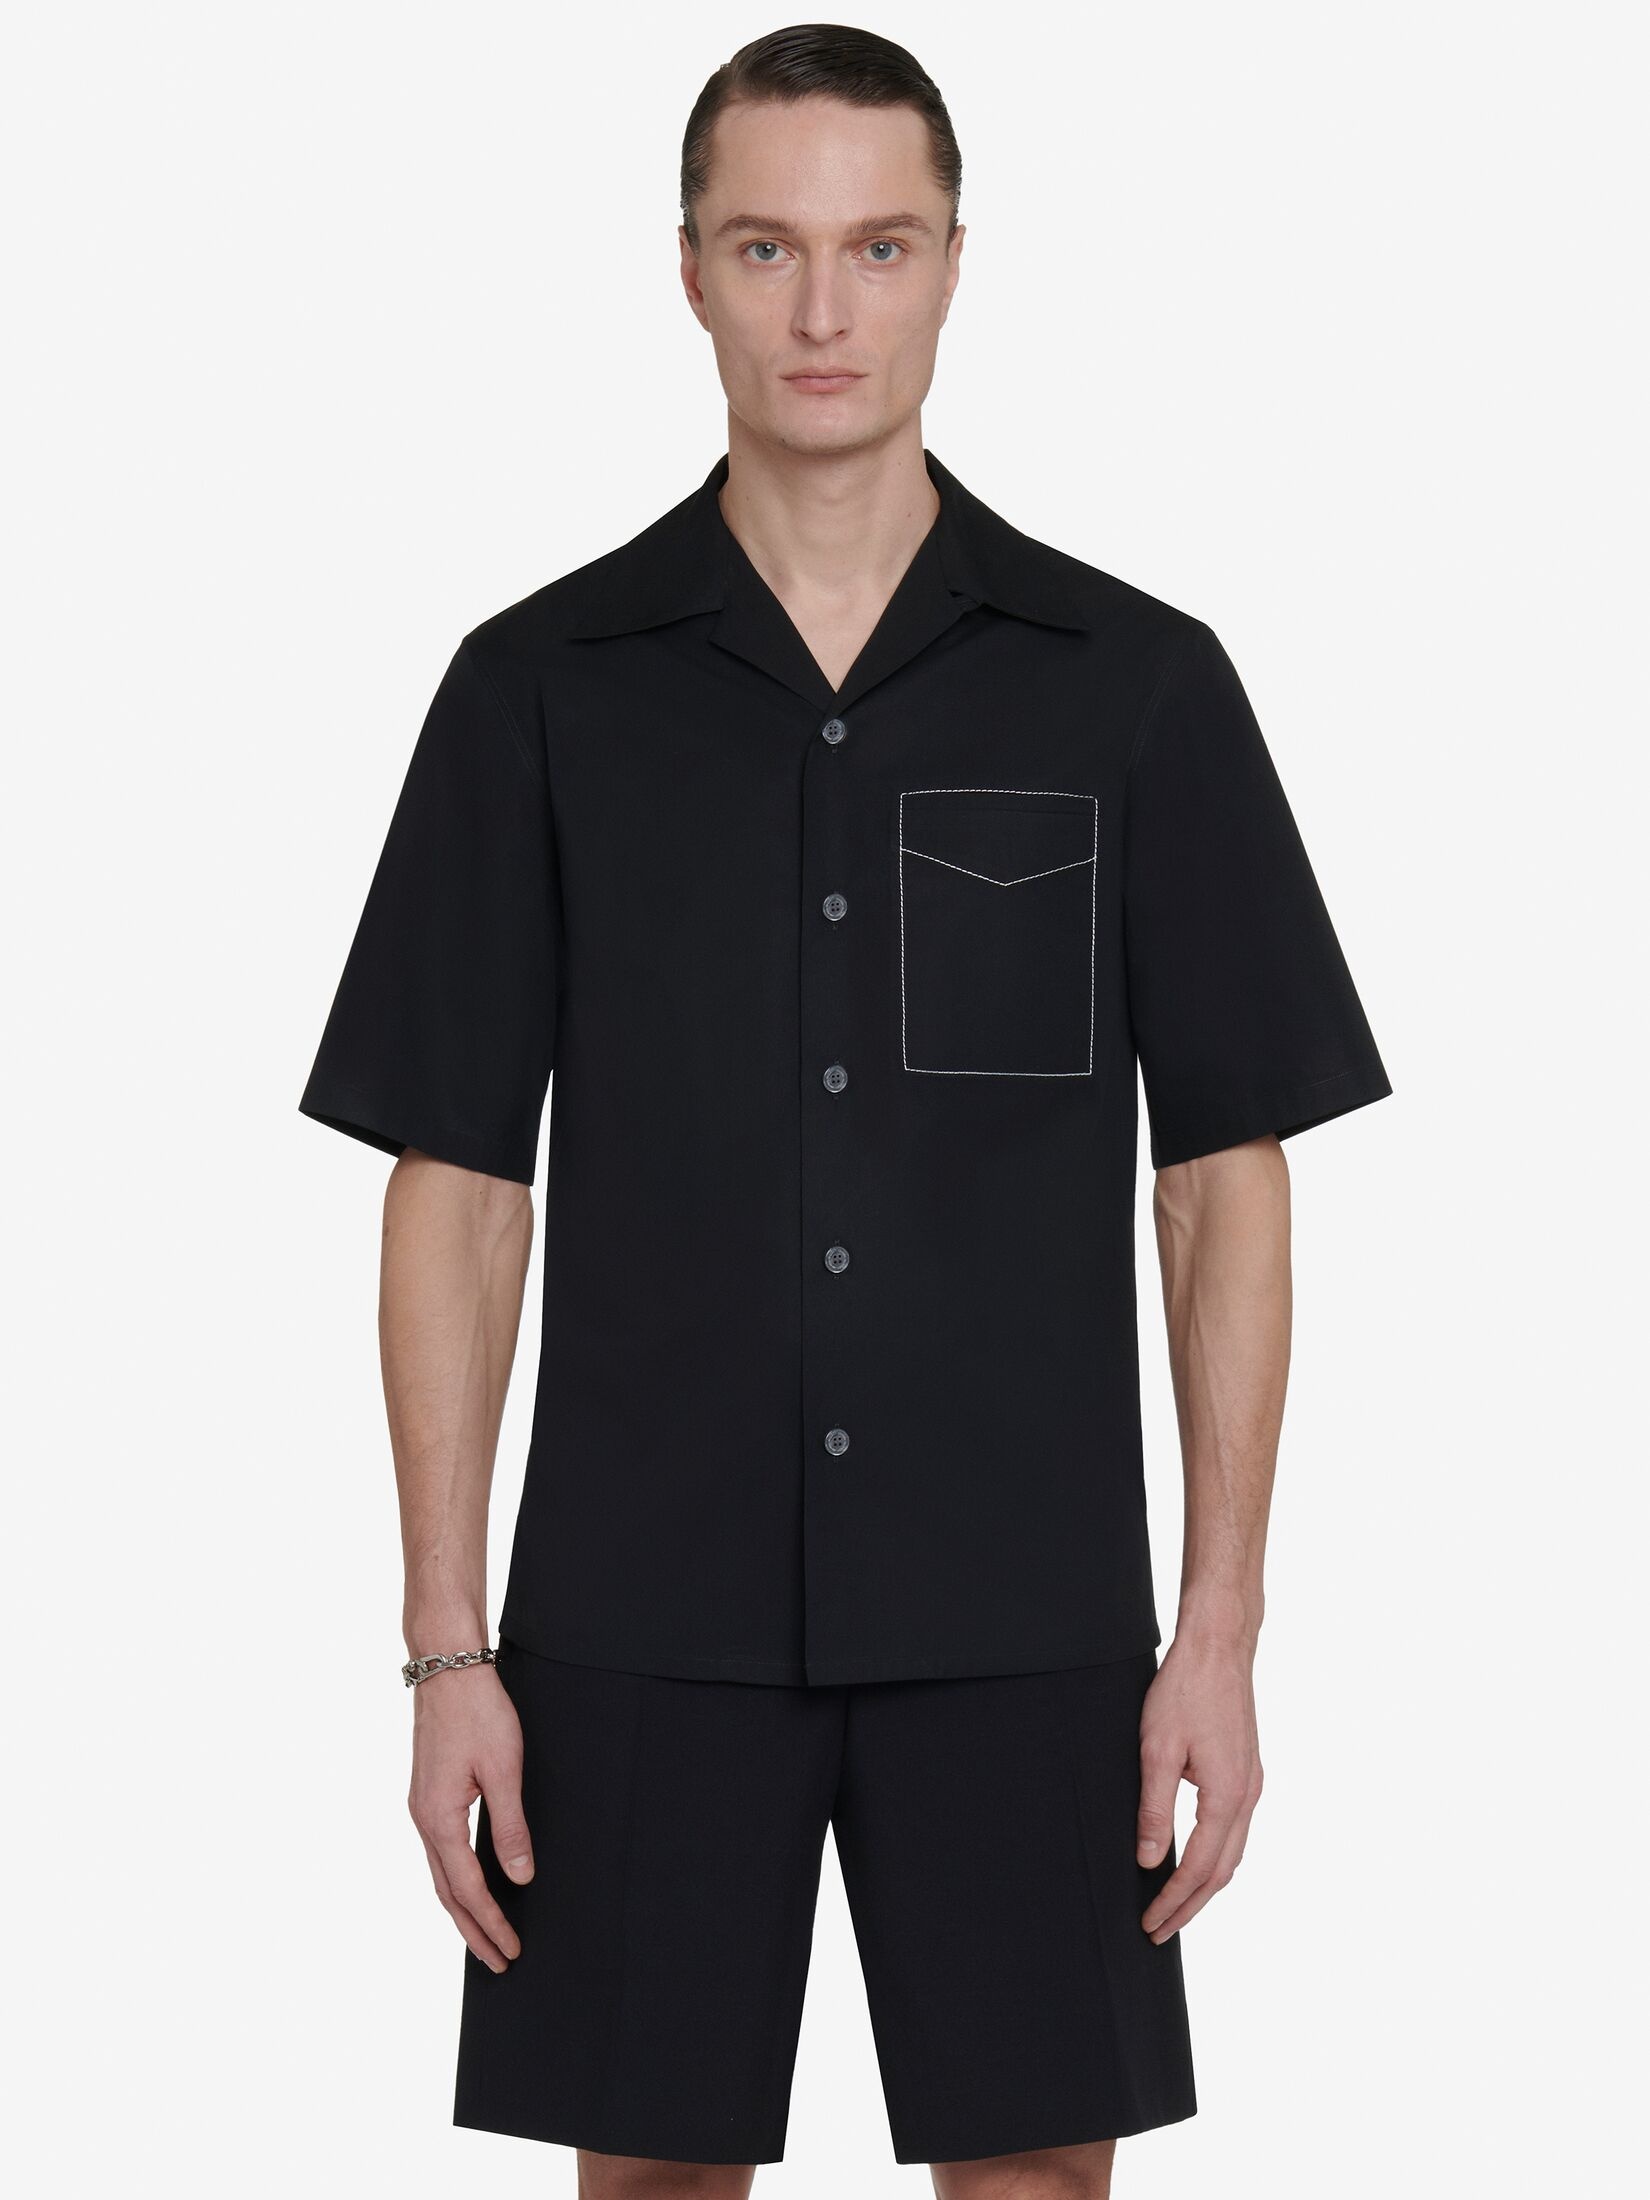 Men's Contrast Stitch Hawaiian Shirt in Black - 5